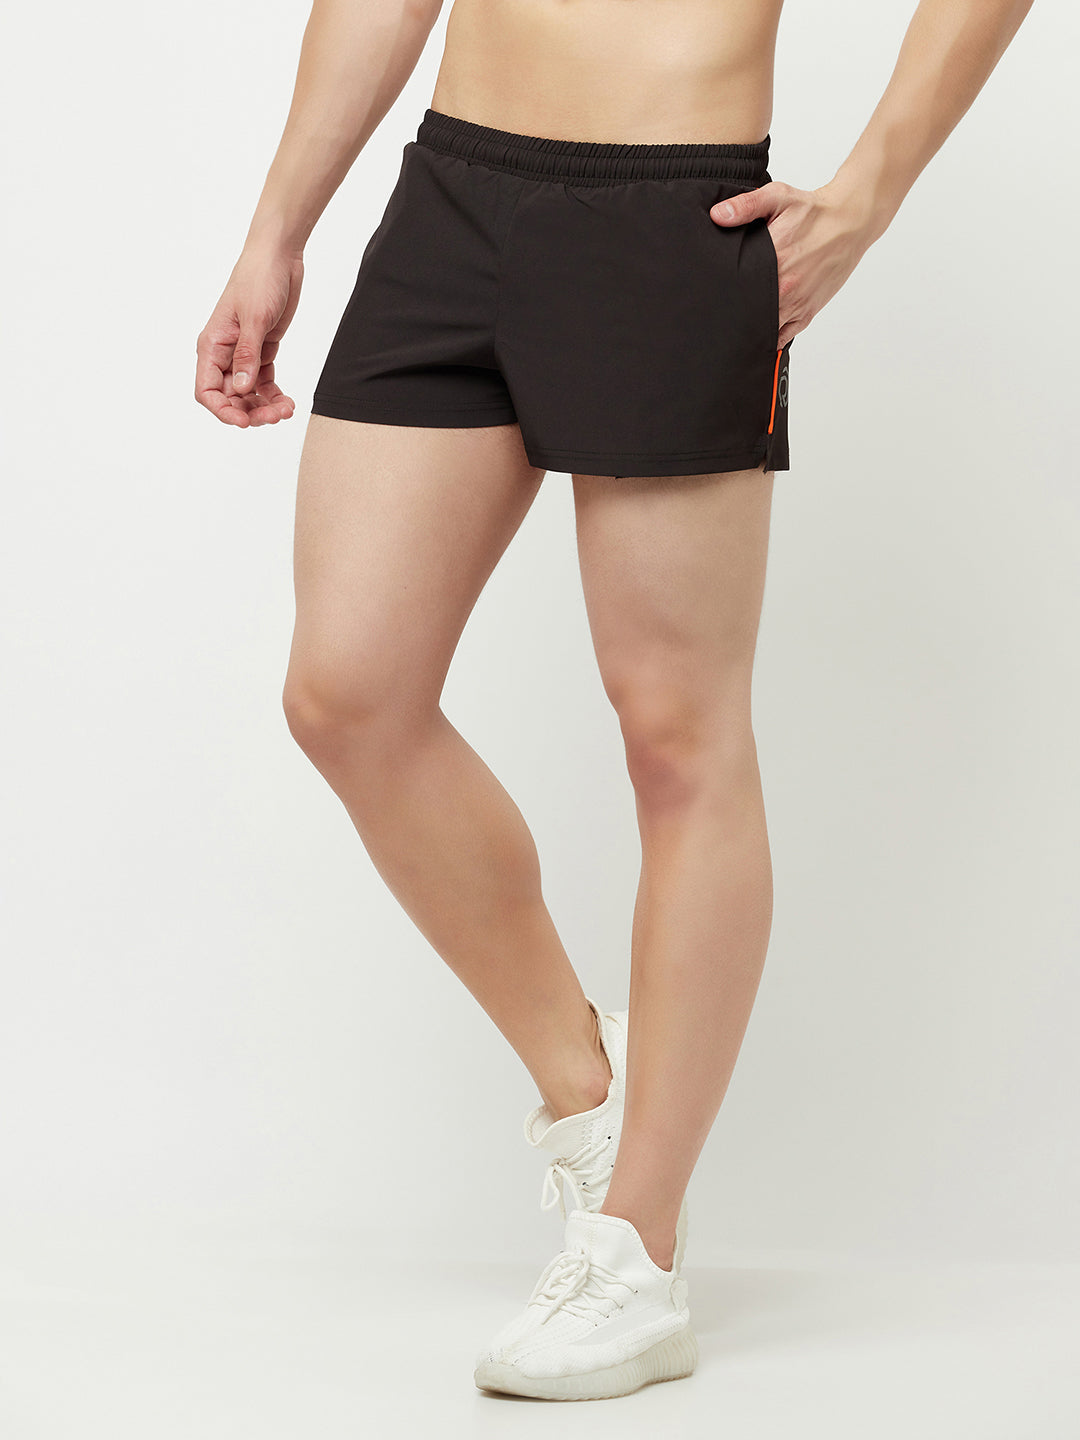 Pro 2" Shorts with Zipper Back Pocket